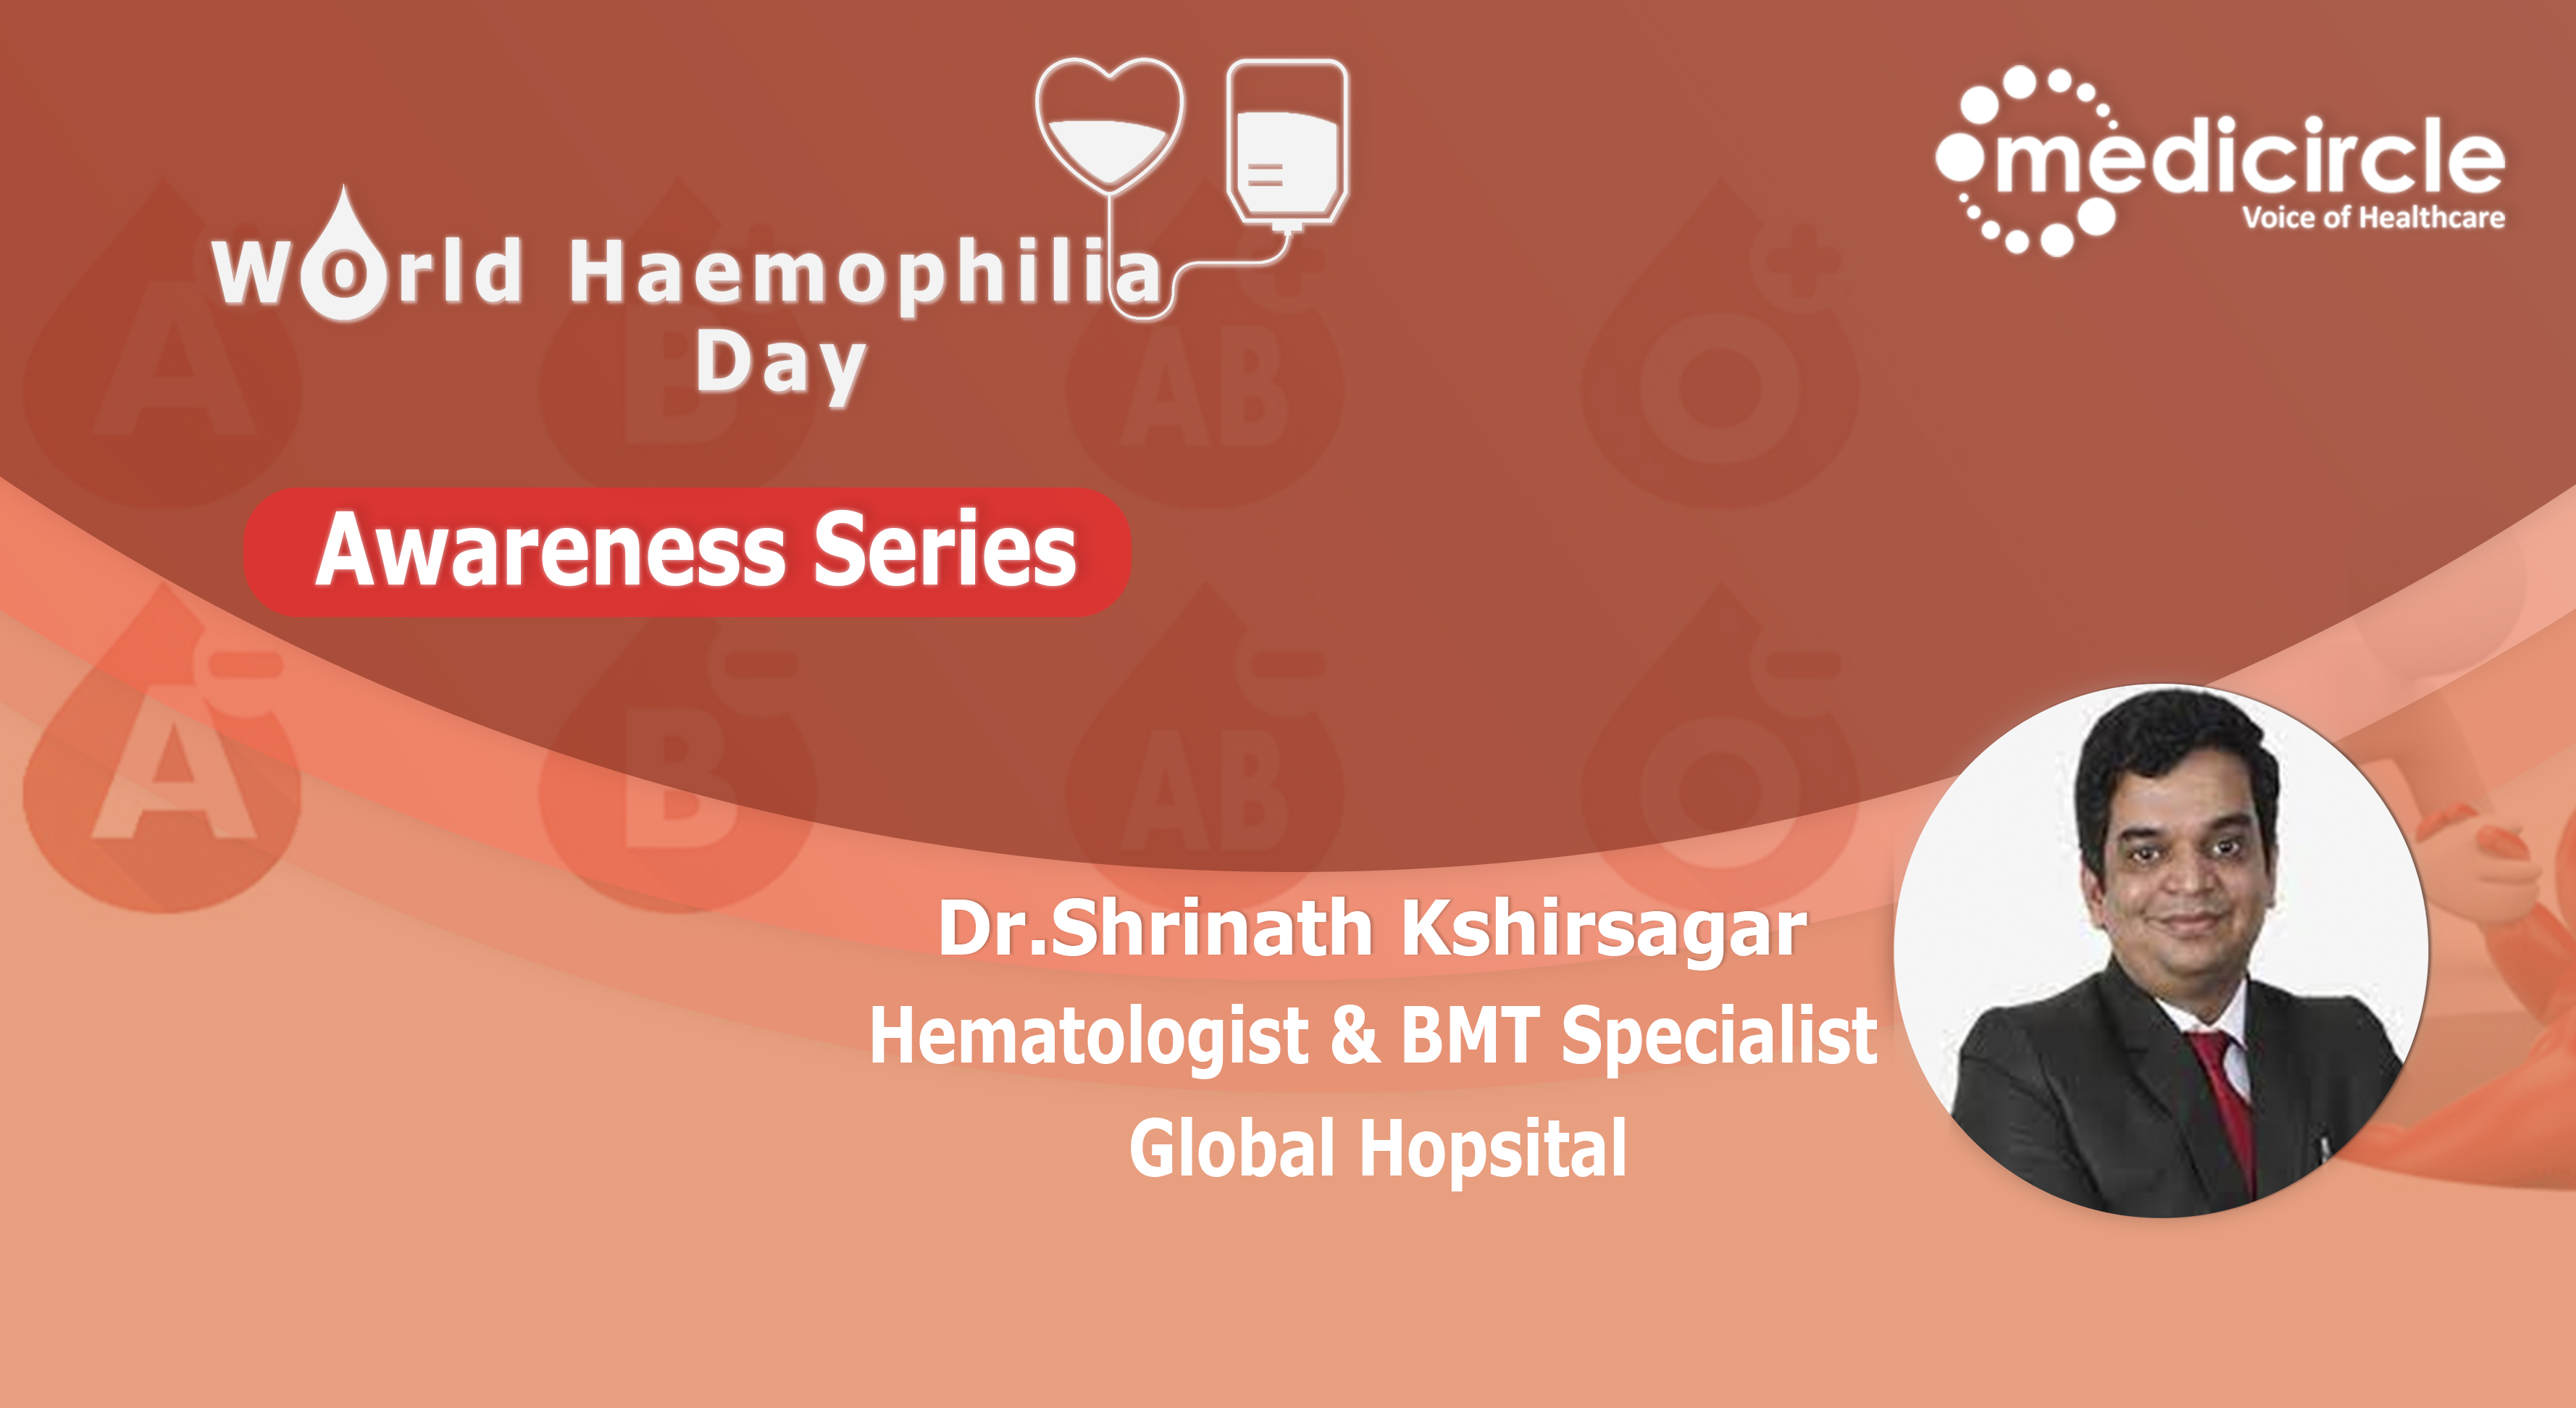 Dr. Shrinath Kshirsagar on preventive and curative measures of Haemophilia